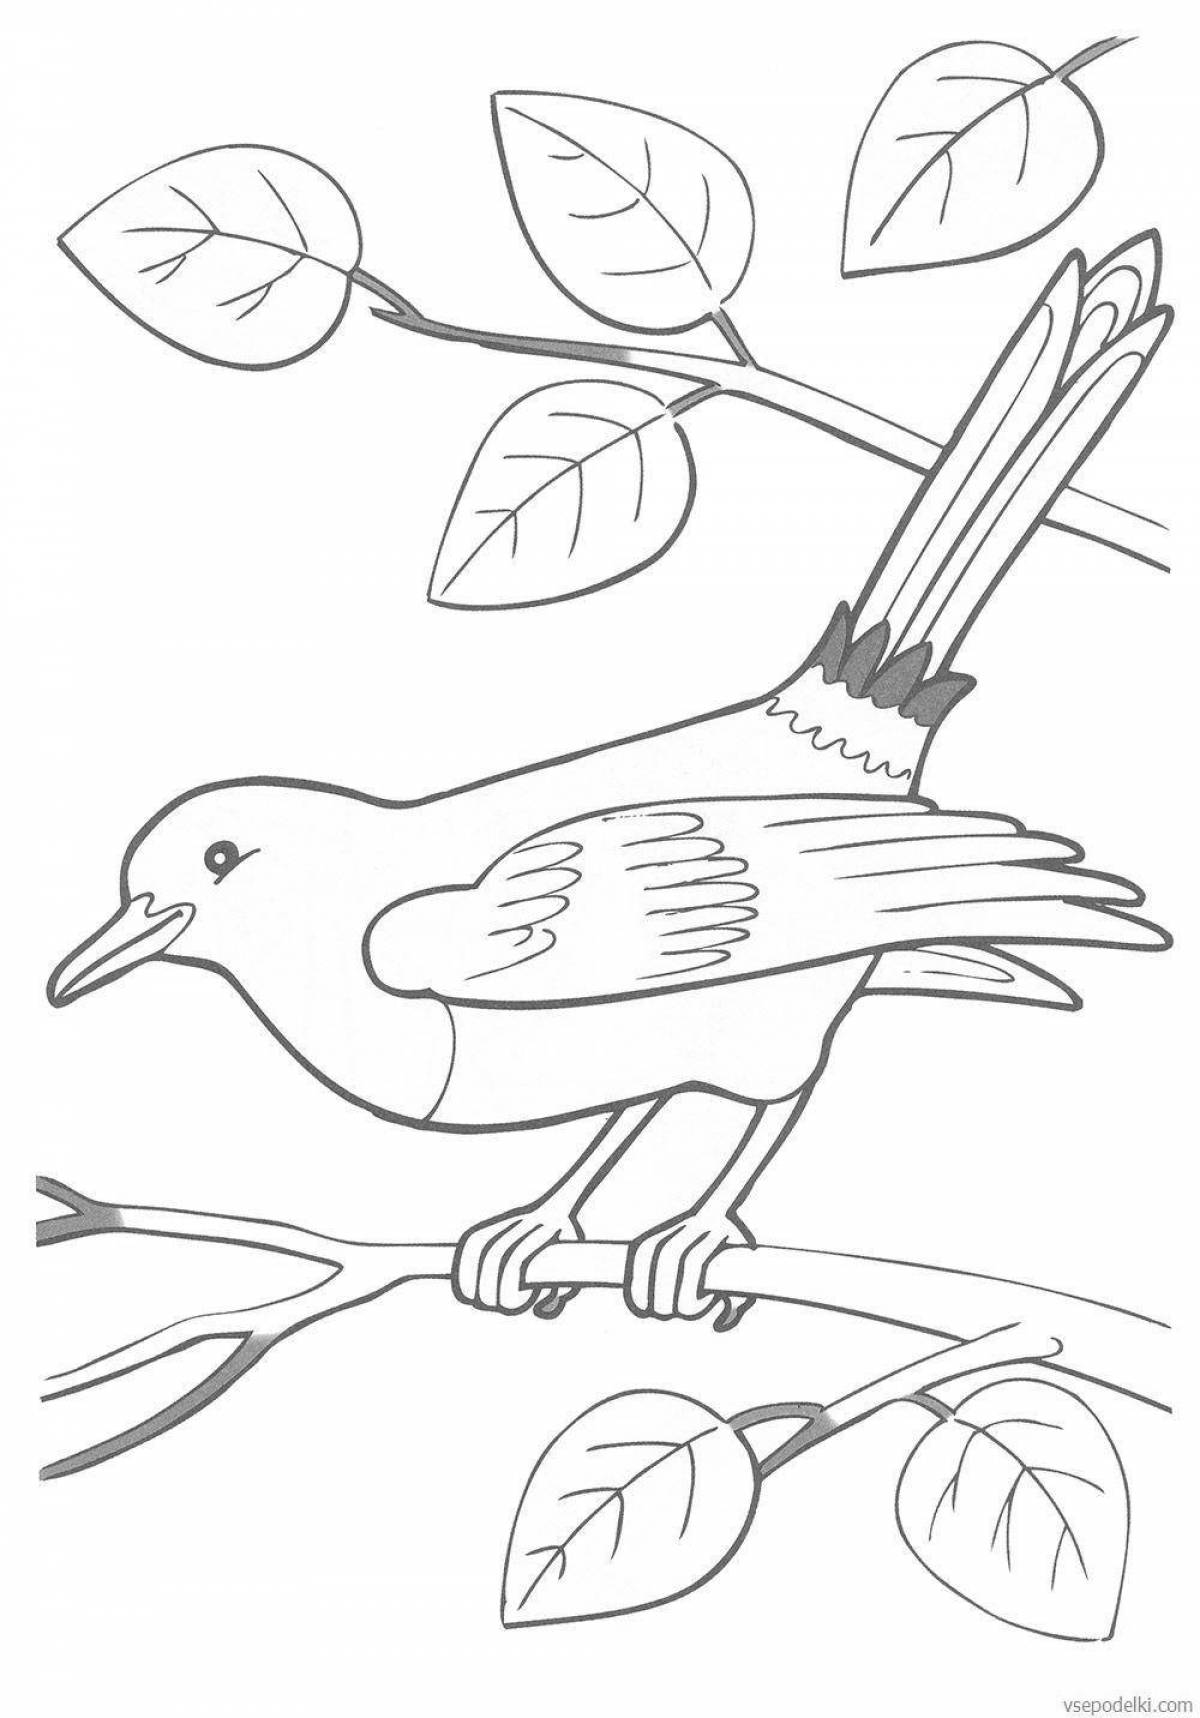 Preparatory group of animated wintering birds